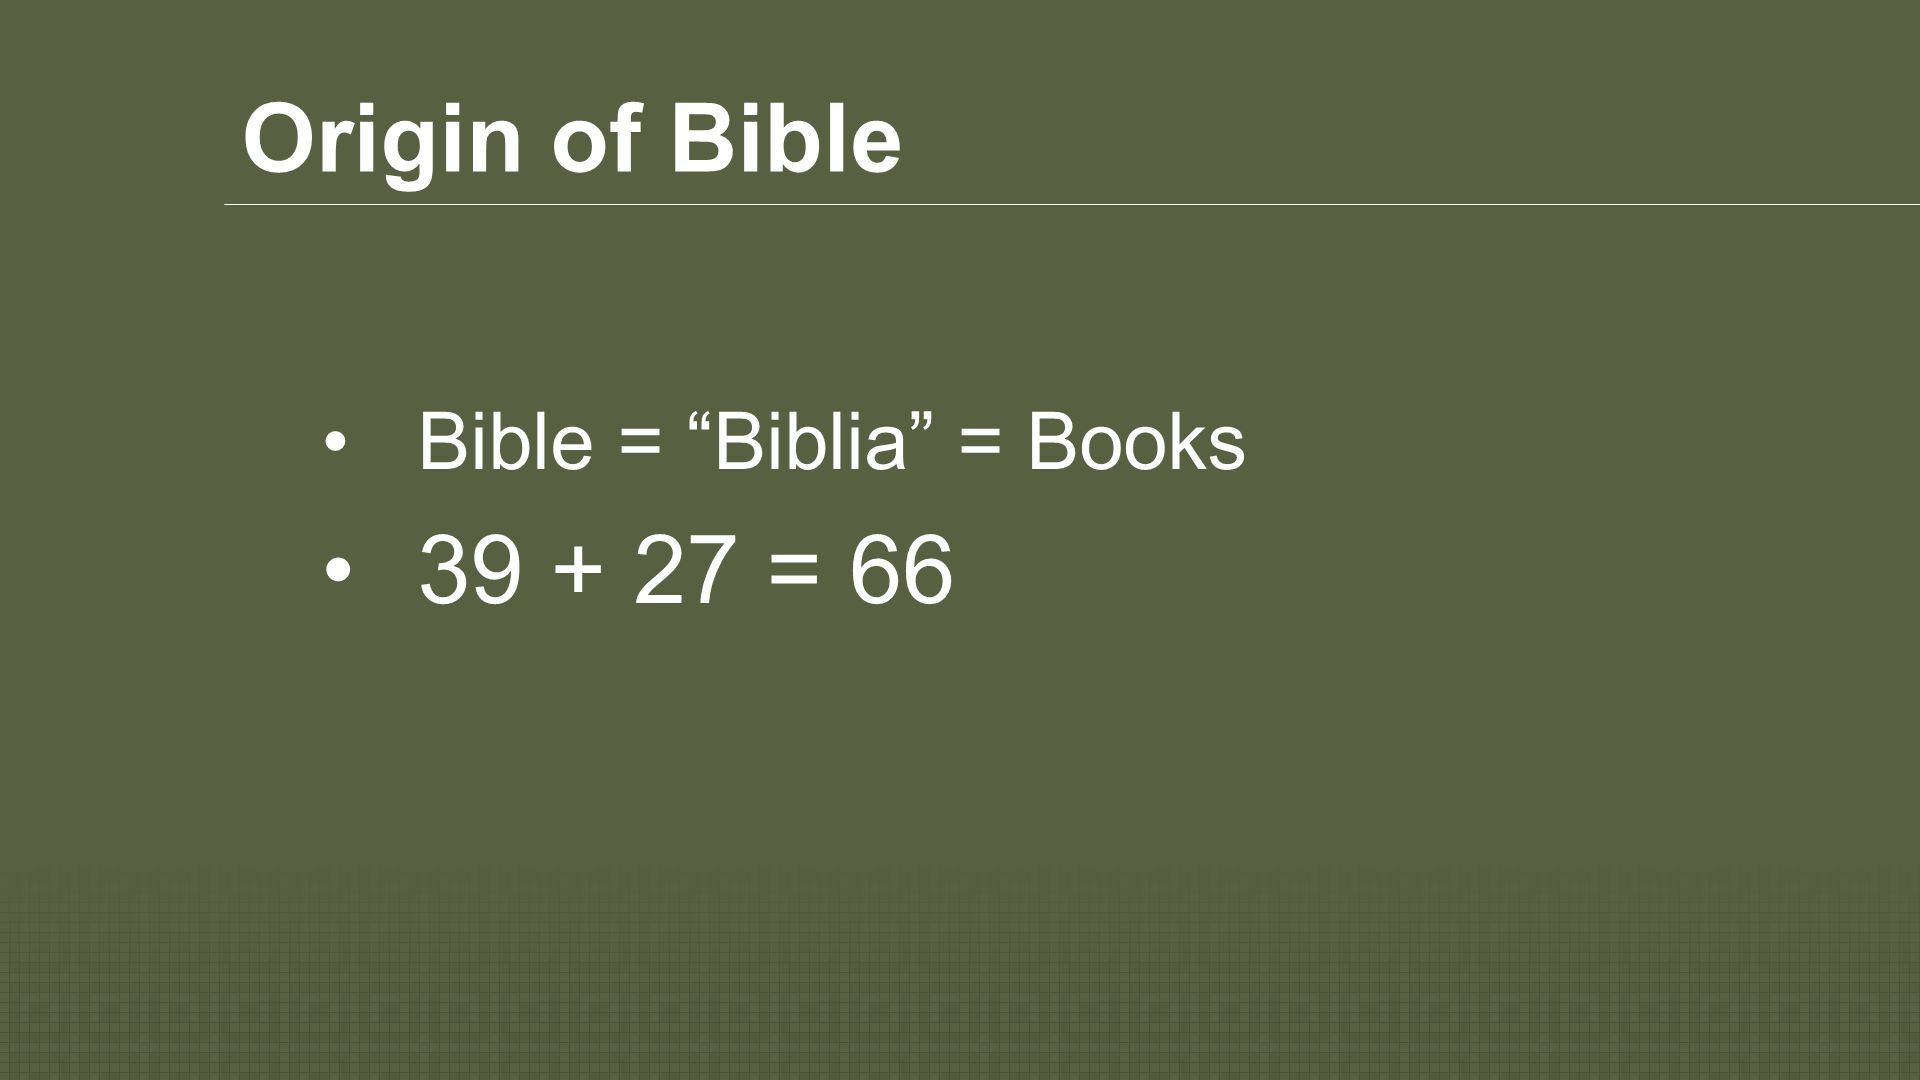 Origin of Bible Bible = Biblia = Books = 66